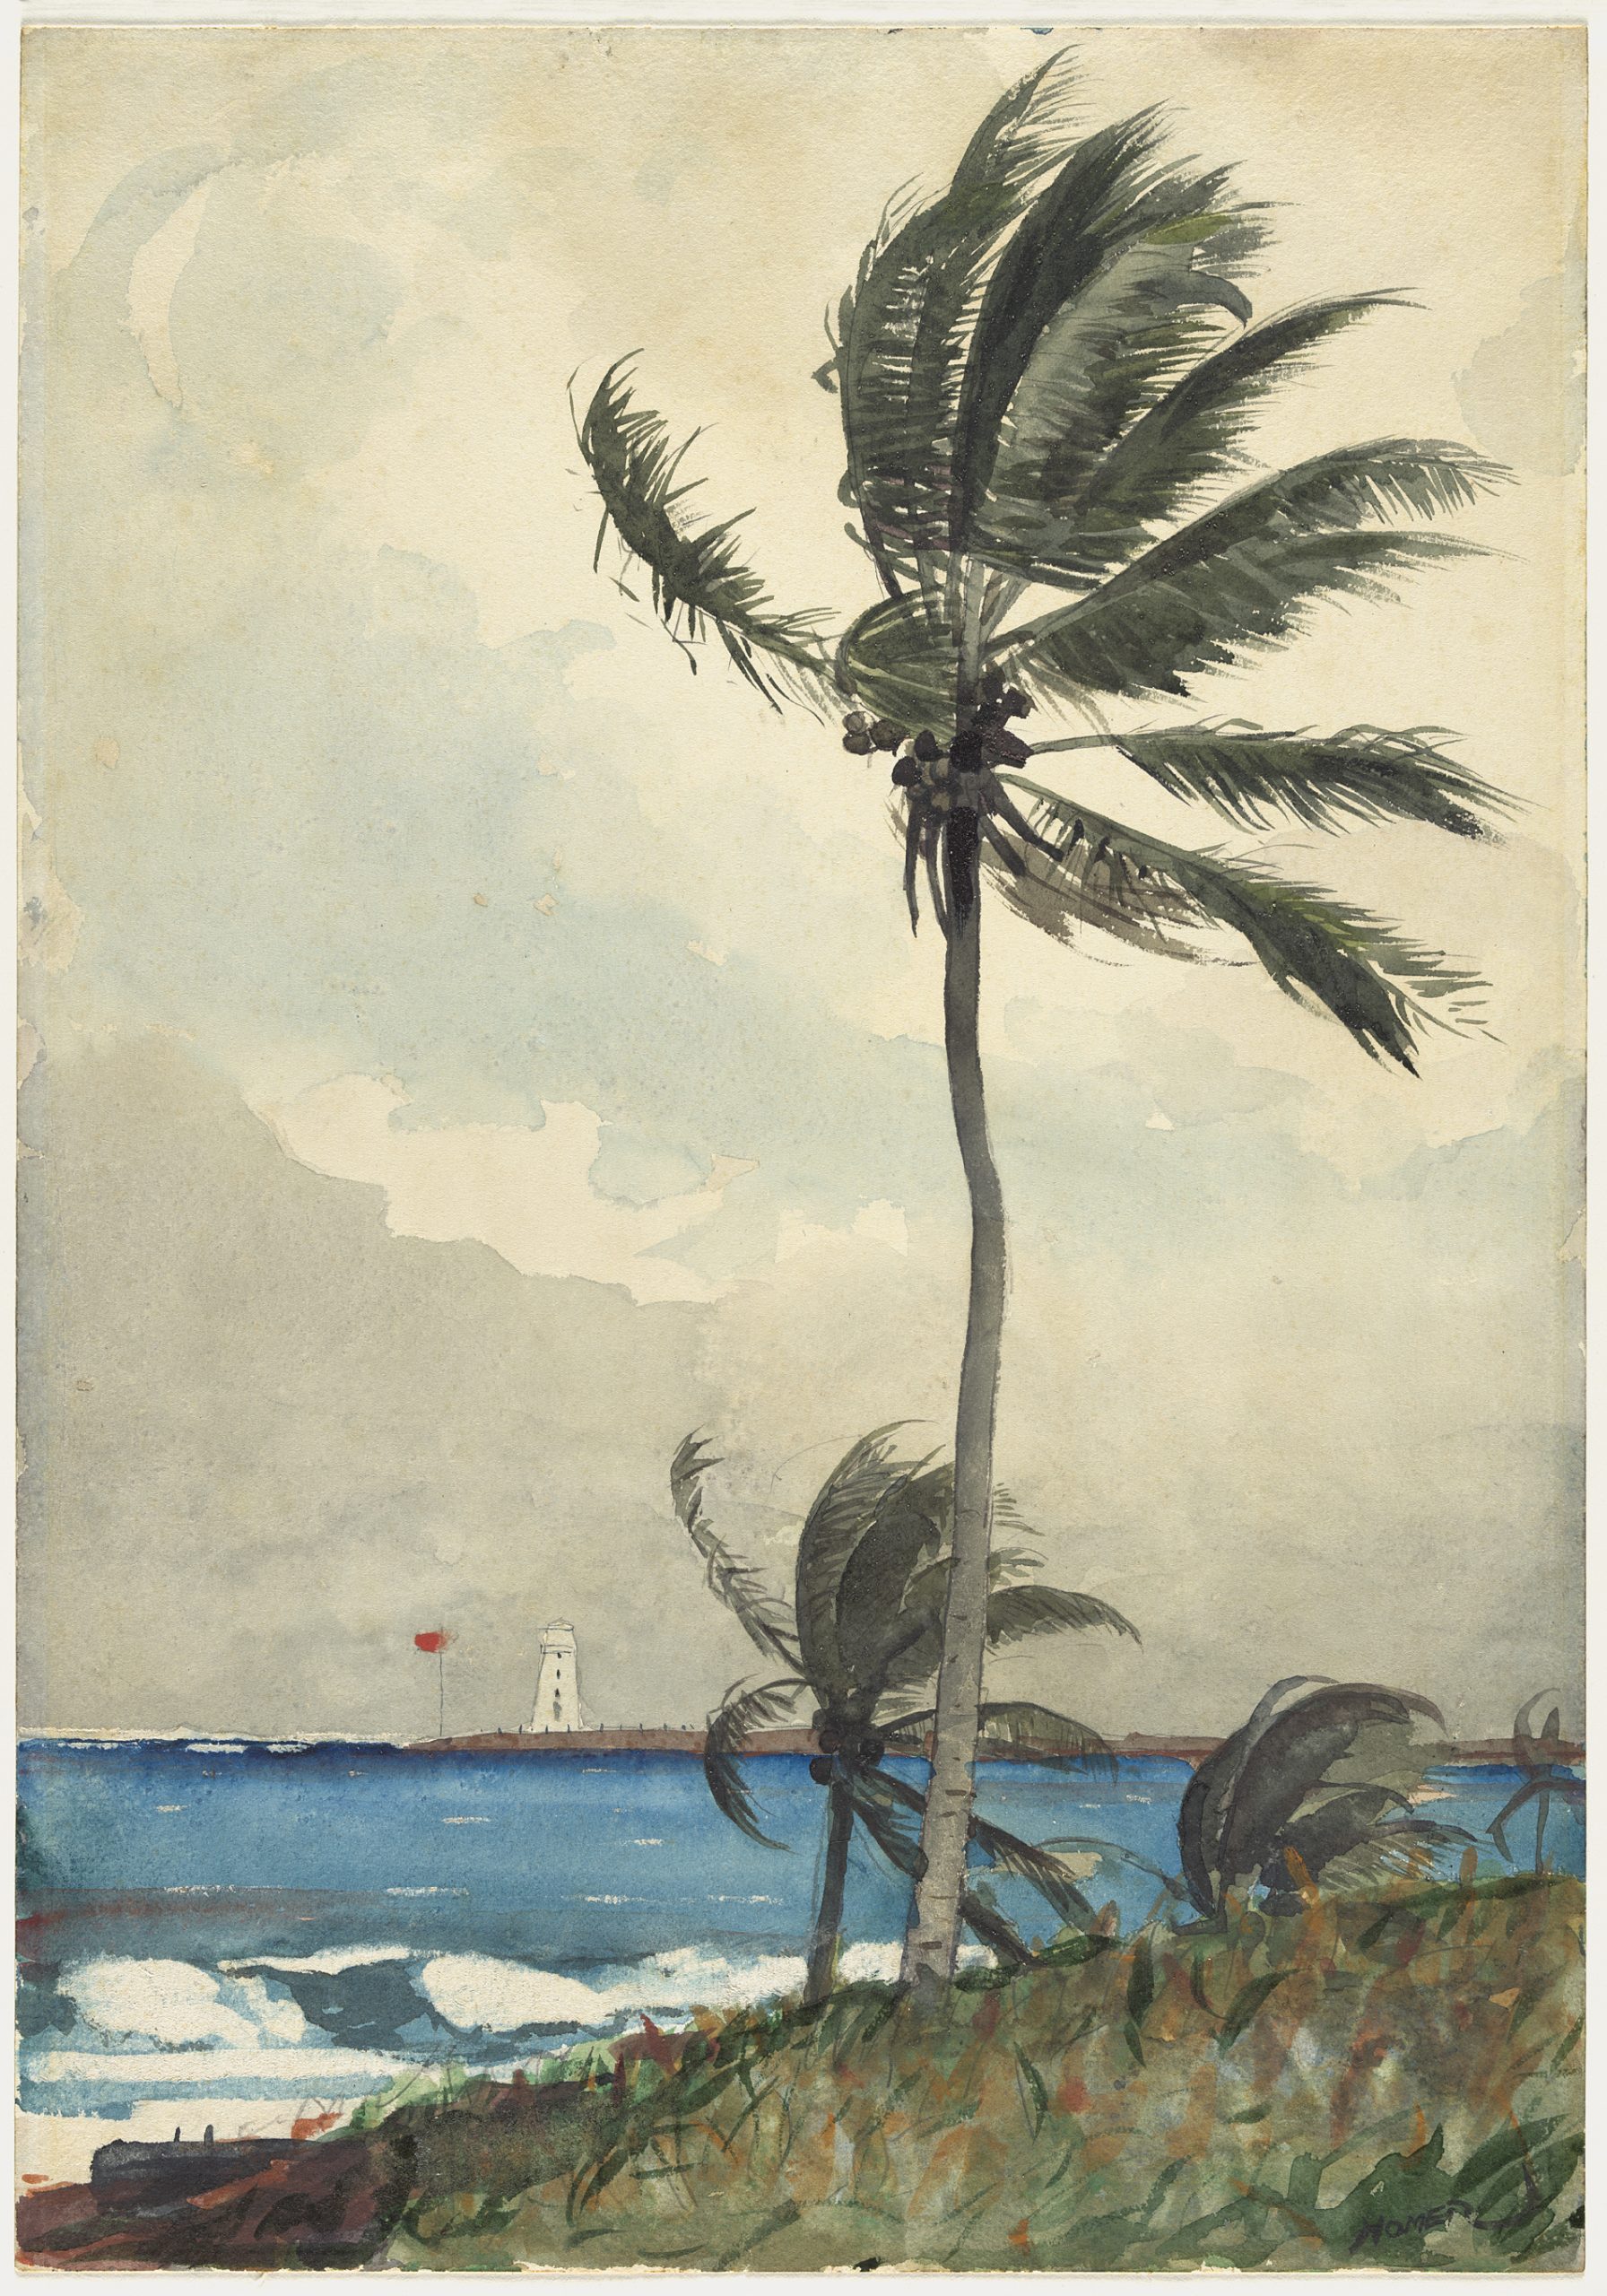 Winslow Homer Palm Tree, Nassau, 1898, Watercolour and graphite on off-white wove paper, 54.3 x 37.8 cm, The Metropolitan Museum of Art, New York
Amelia B. Lazarus Fund, 1910 10.228.6
© The Metropolitan Museum of Art, New York